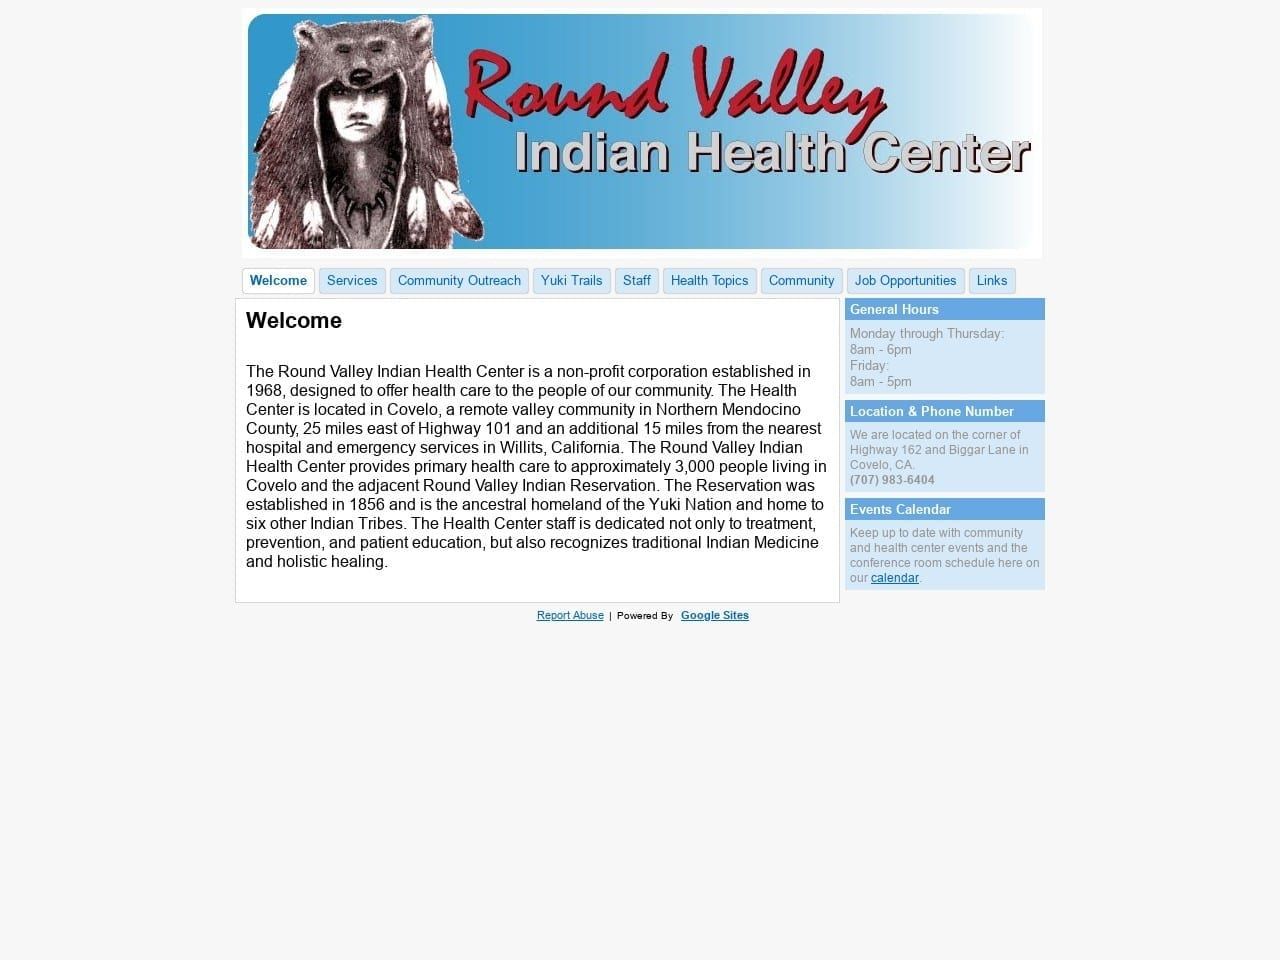 Round Valley Indian Health Center Website Screenshot from roundvalleyindianhealthcenter.com